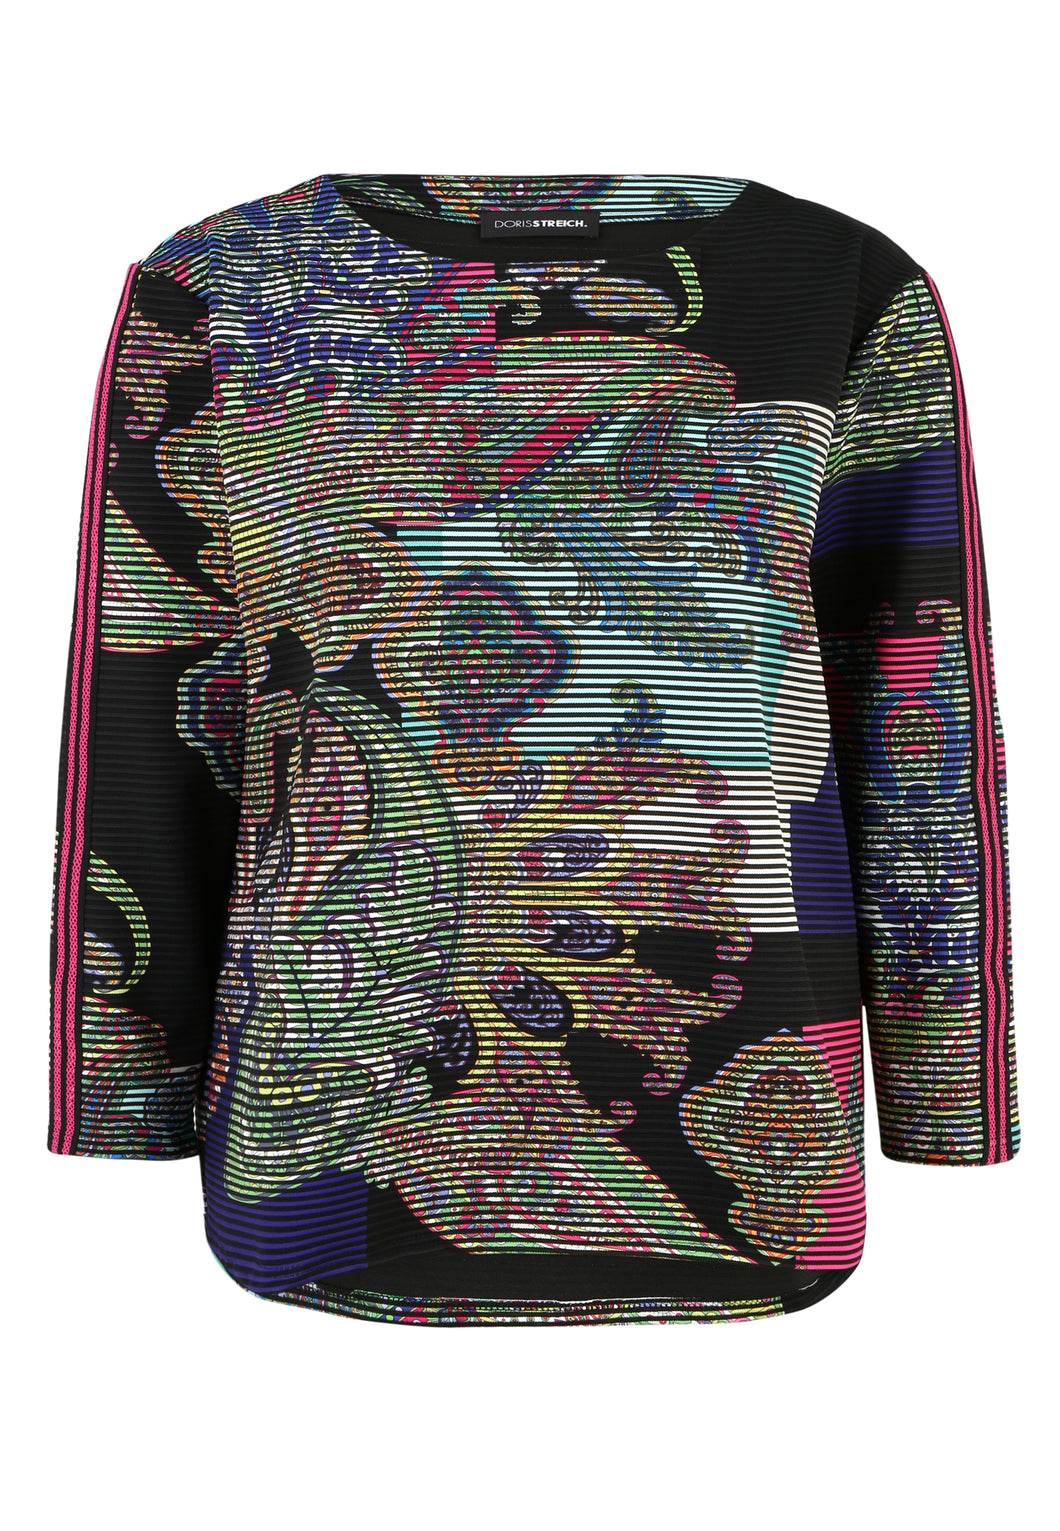 Doris Streich Shirt-Pulli mit Paisley-Print im Grafikmix Gr 46 - 56